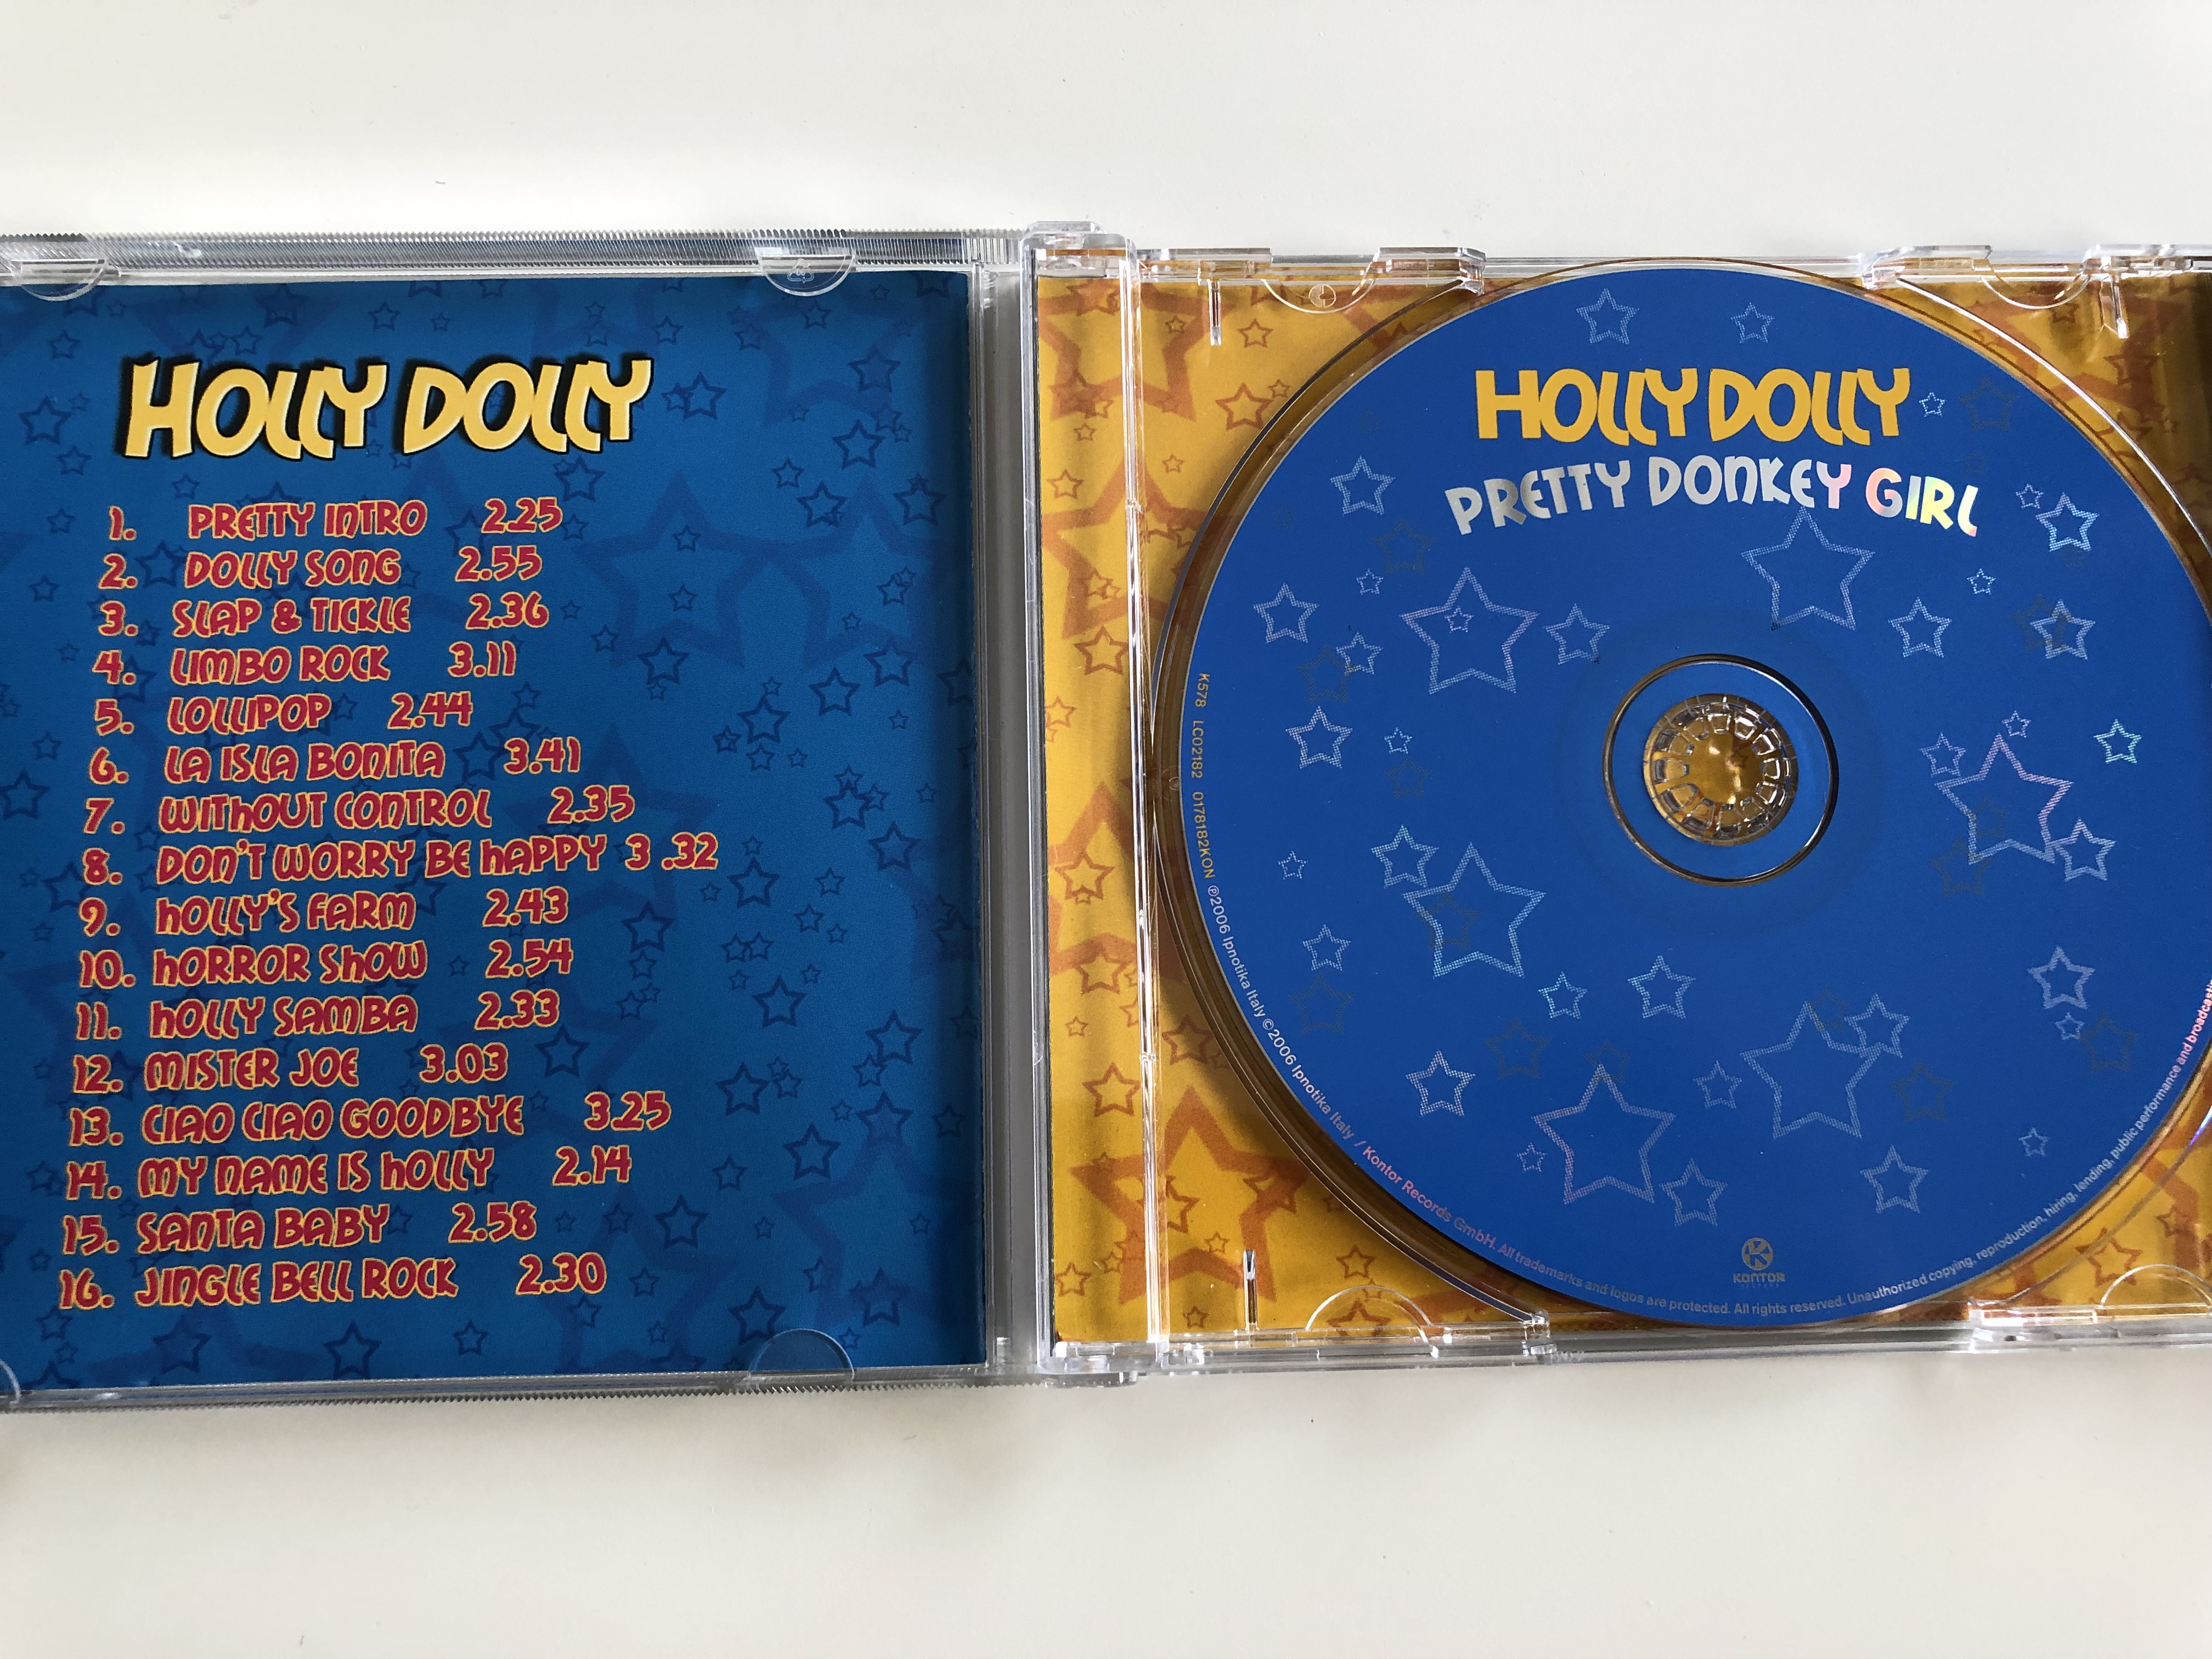 holly-dolly-pretty-donkey-girl-dolly-song-limbo-rock-without-control-holly-s-farm-mister-joe-jingle-bell-rock-audio-cd-2006-0178182kon-3-.jpg